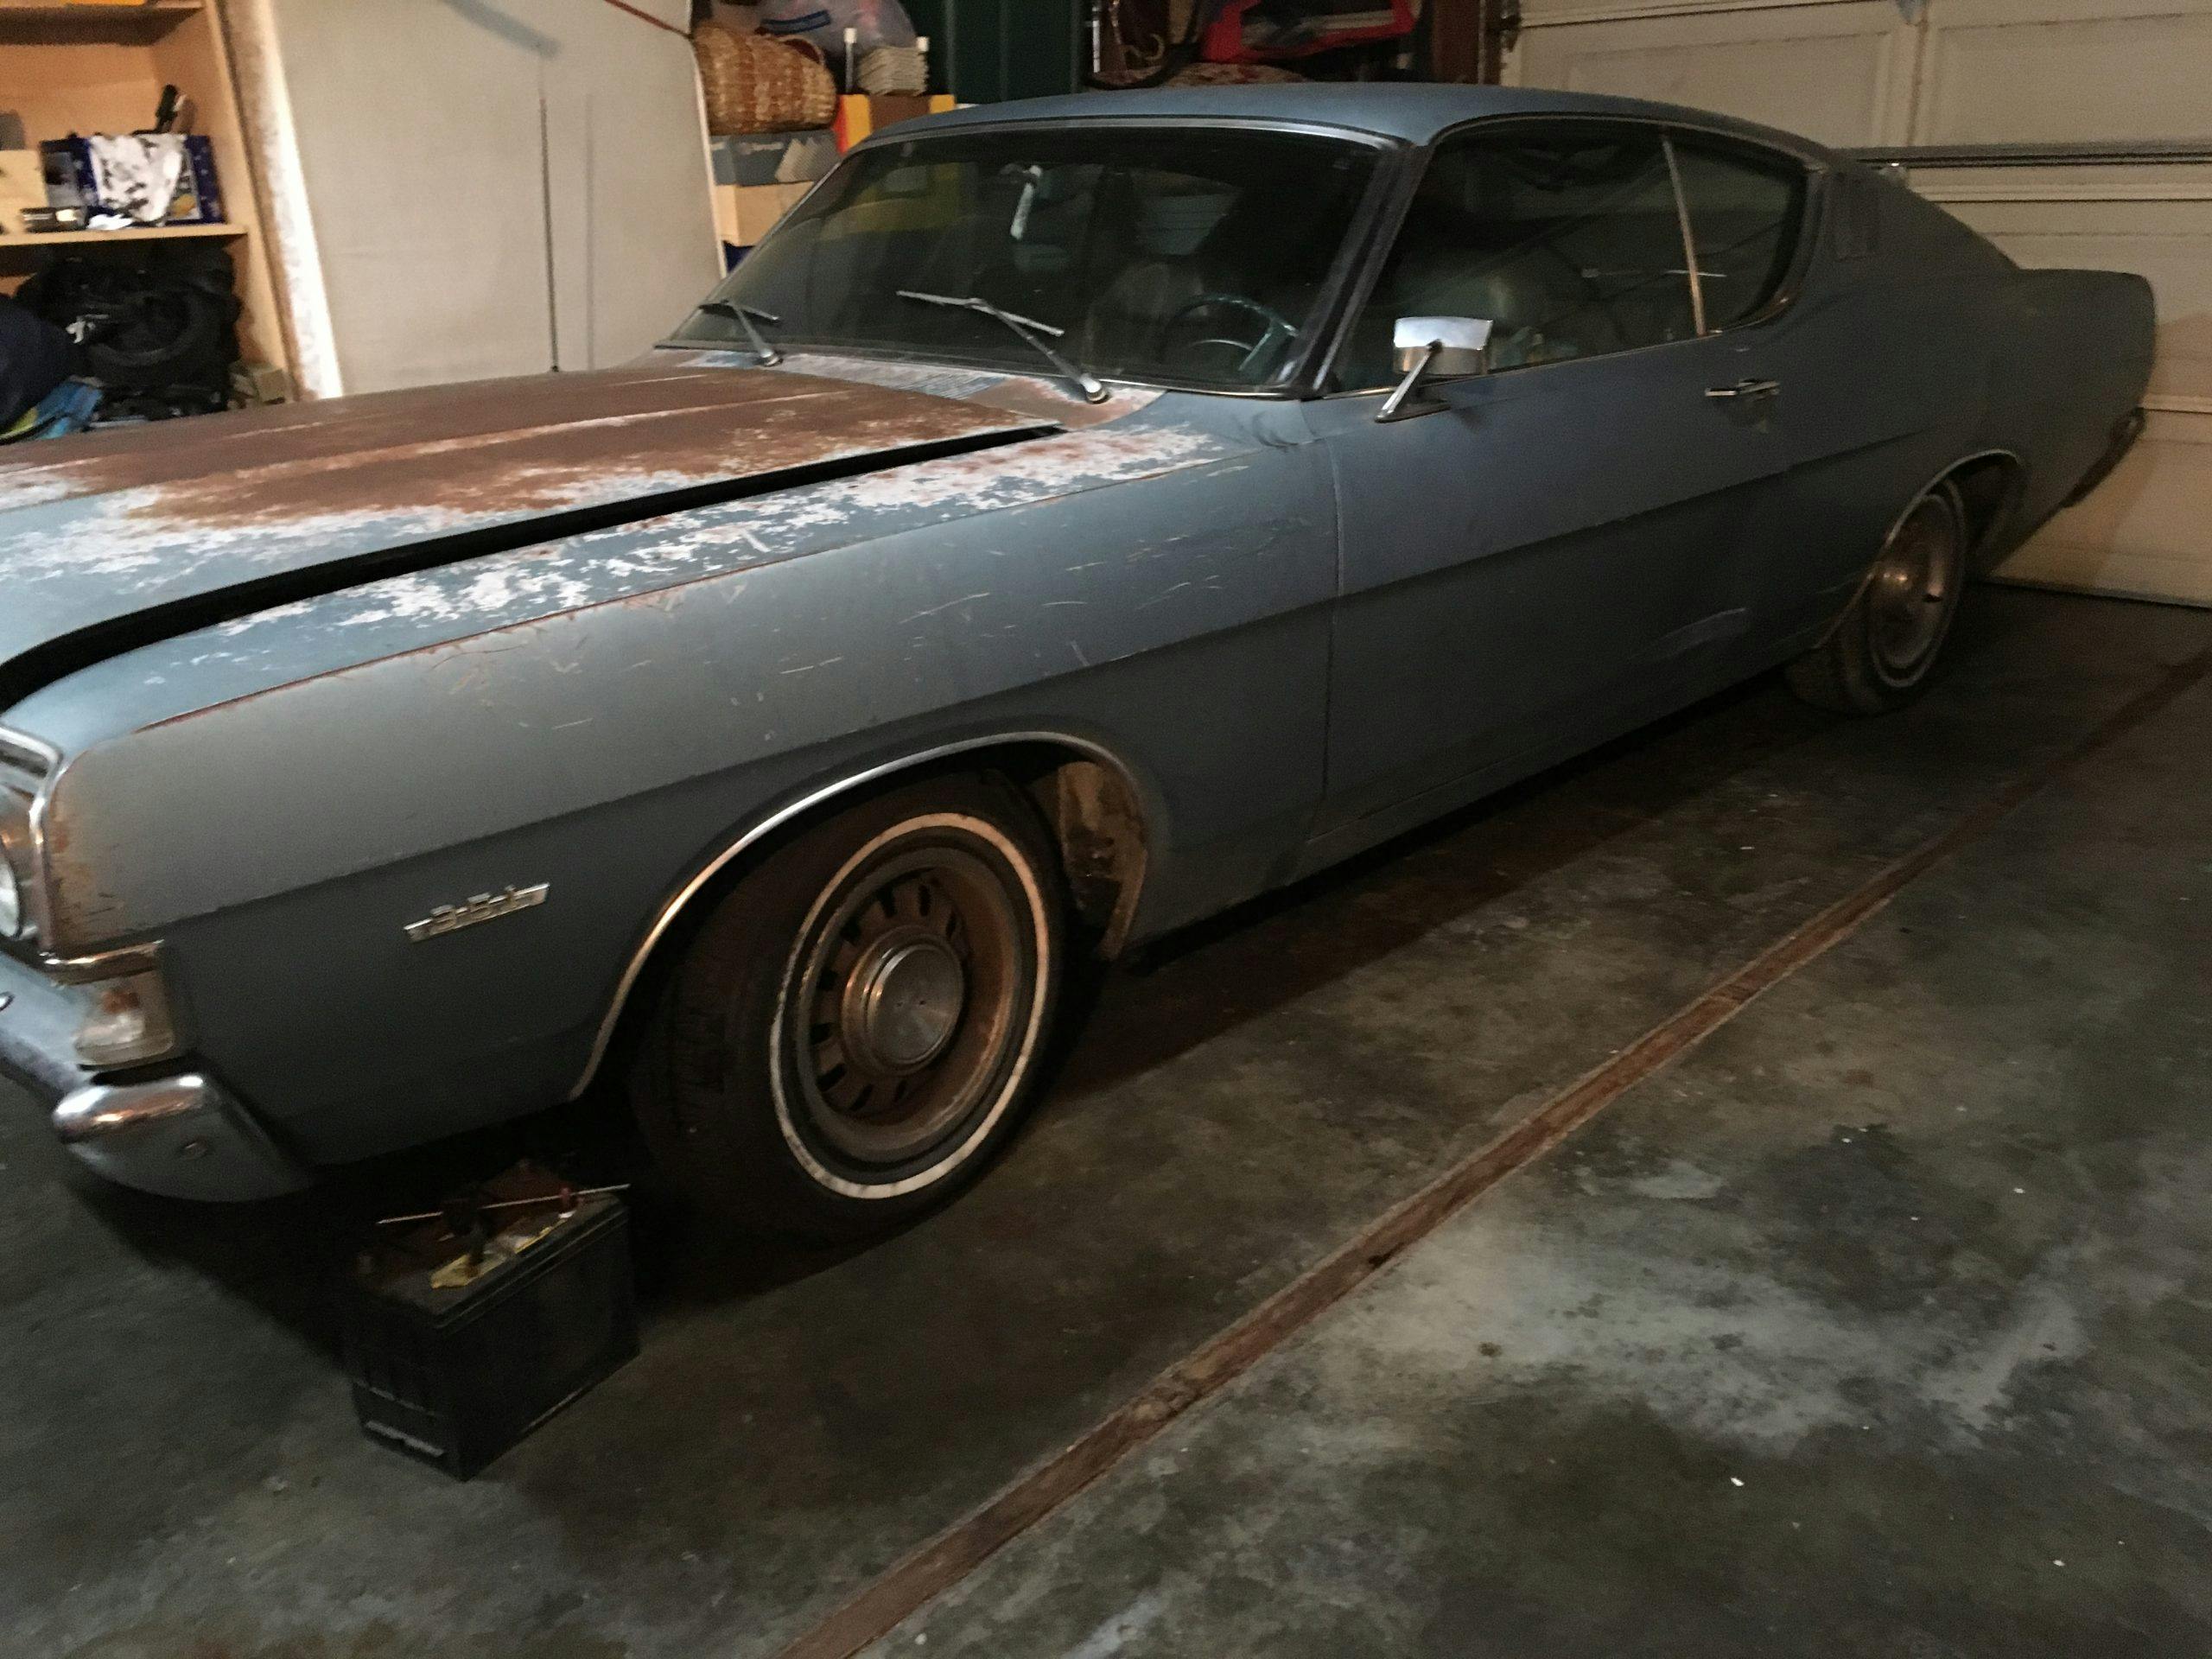 1969 Ford Torino in garage before restoration